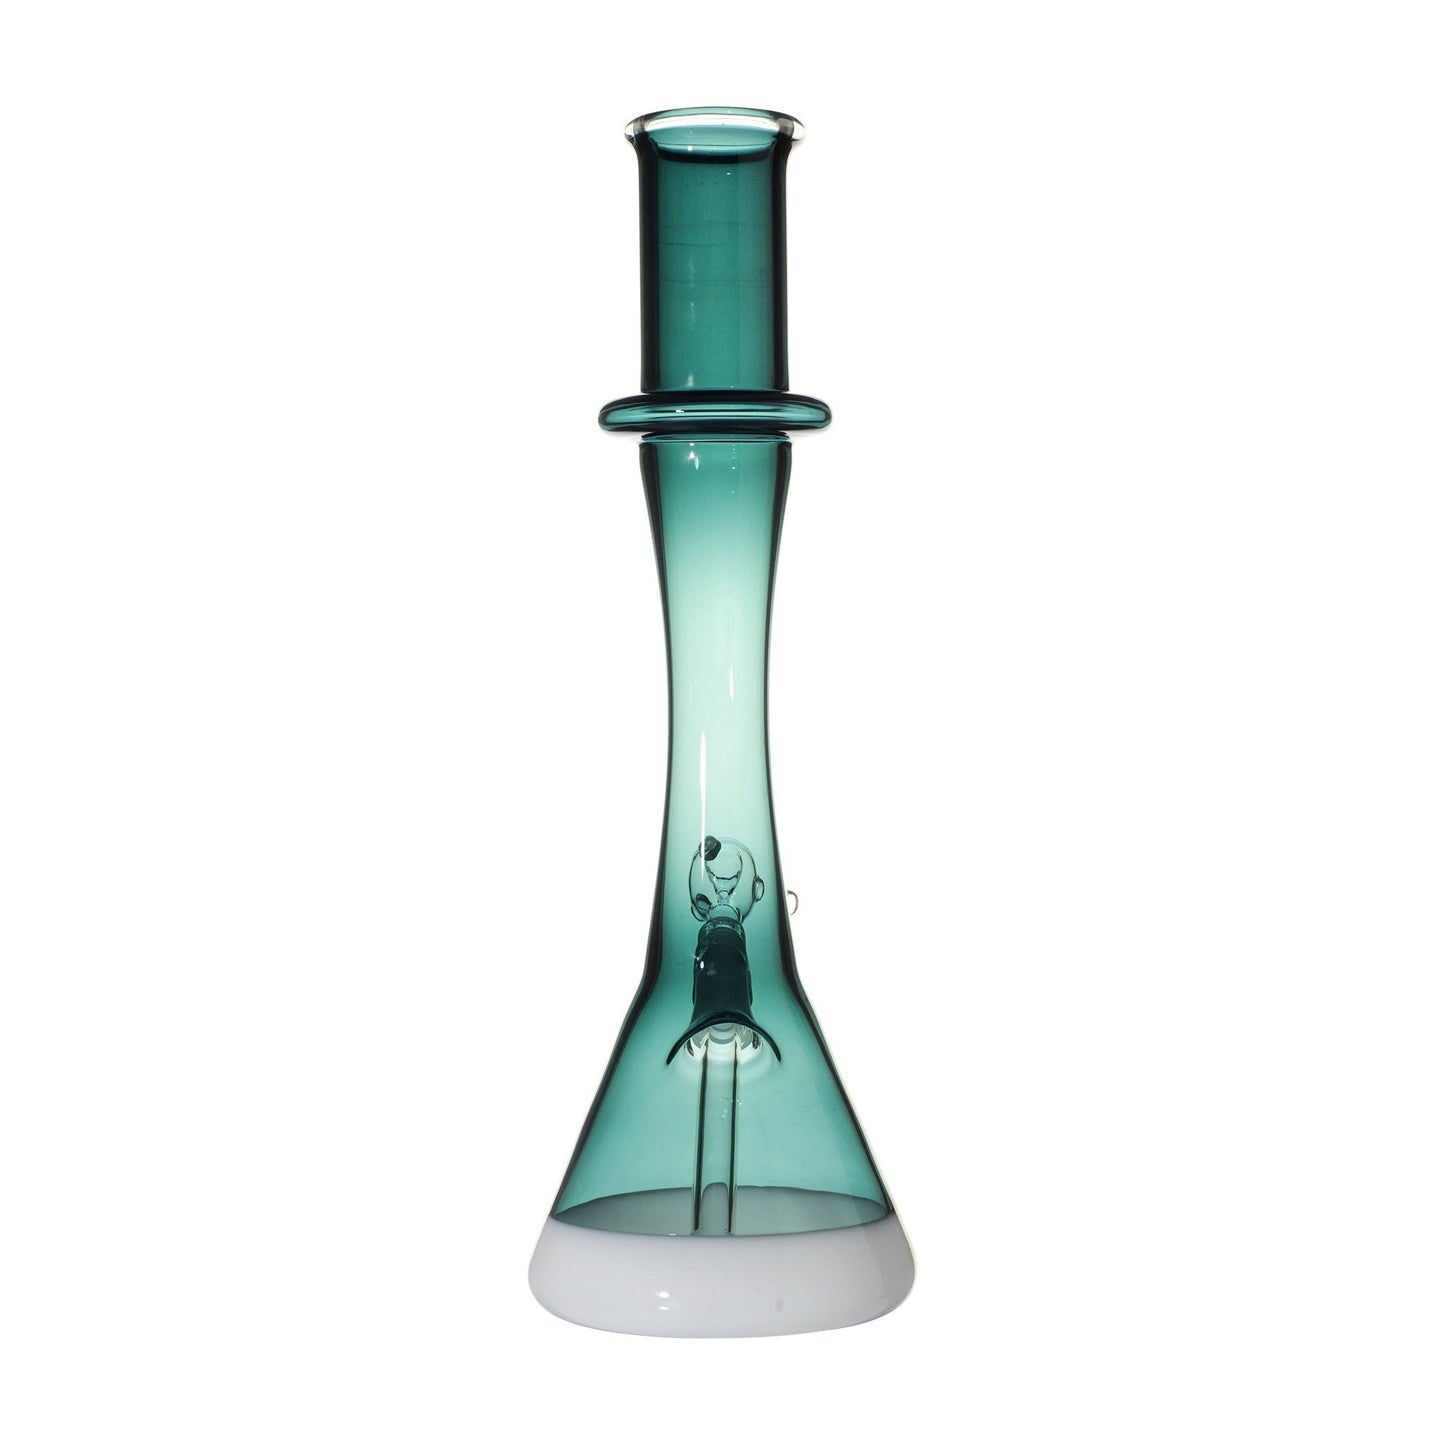 16-inch glass bong smoking device beaker style base splashguard with clean crisp astral design